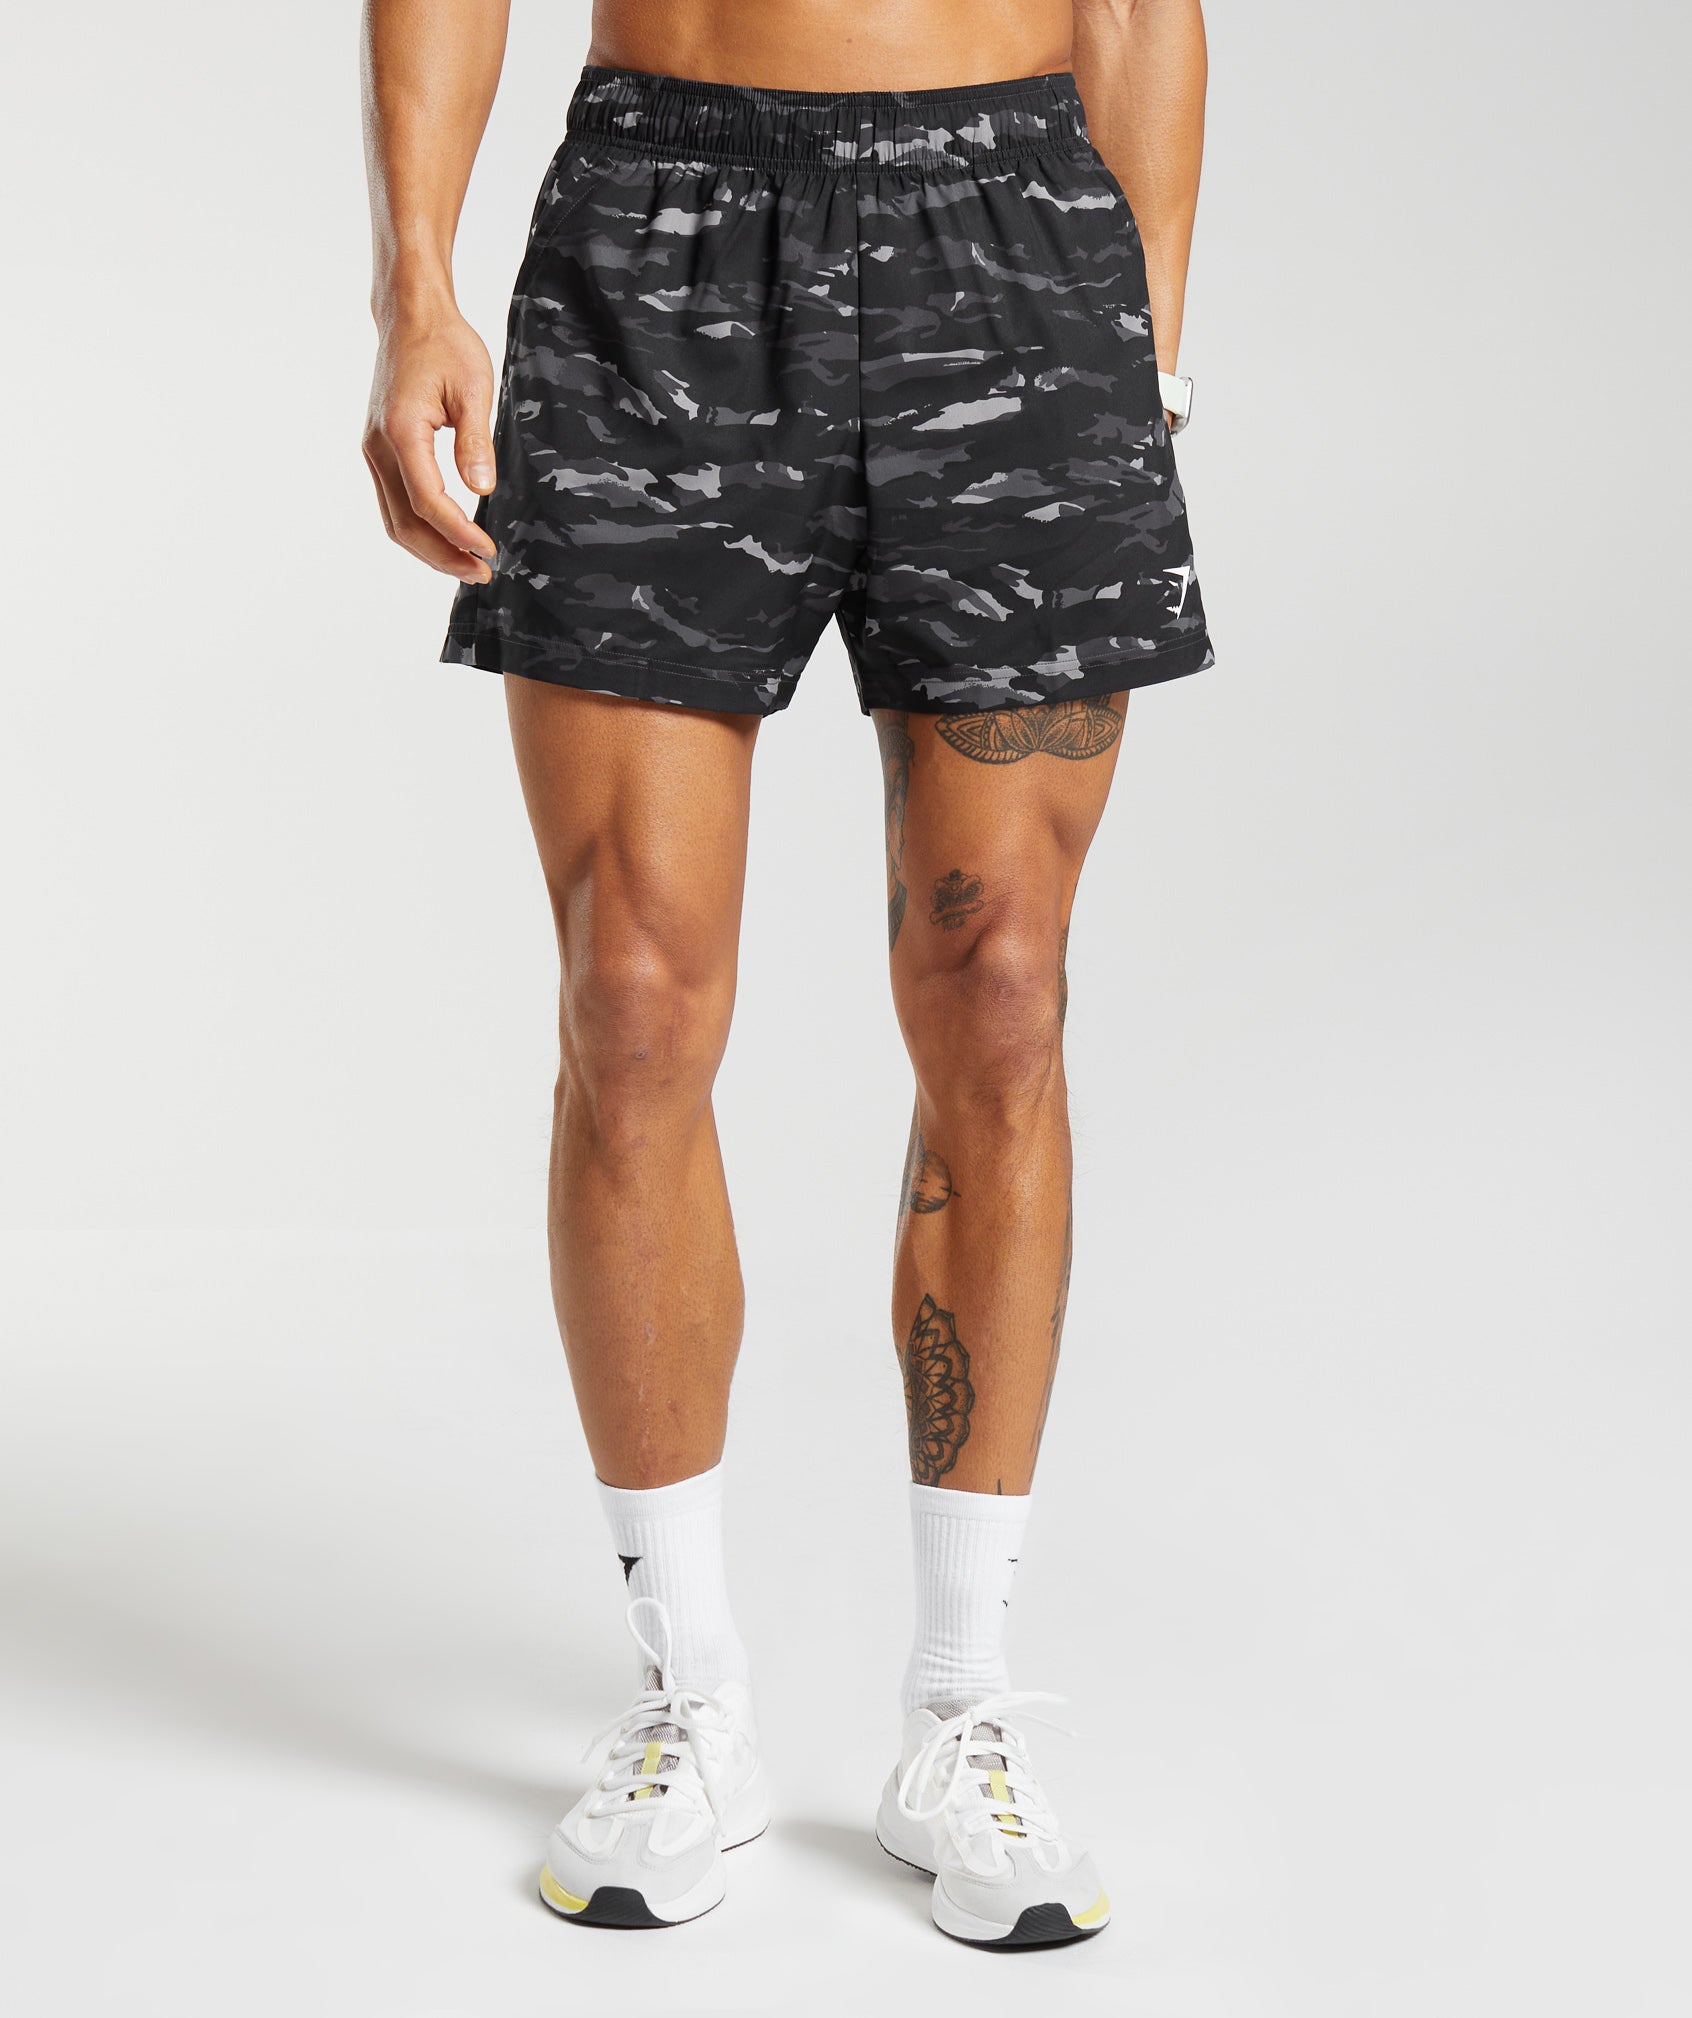 Gymshark Sport 5 Shorts - Silhouette Grey/Black